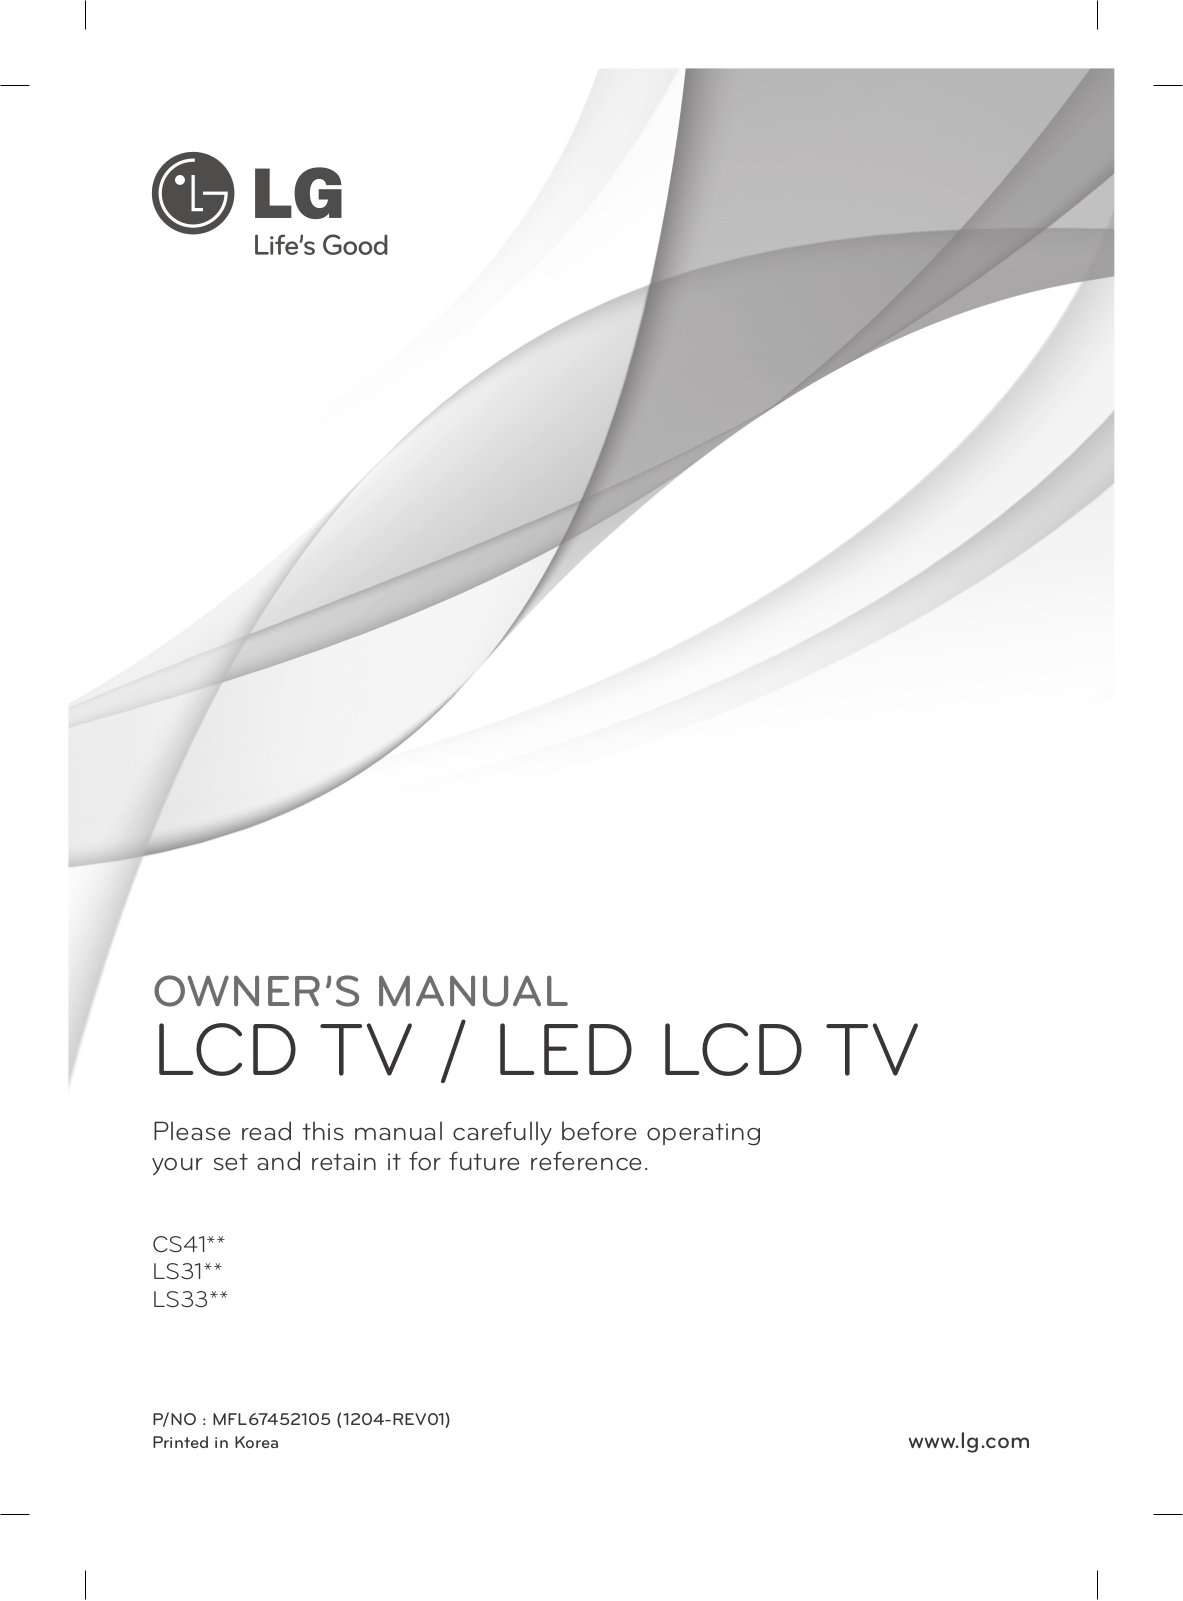 Lg CS41, LS31, LS33 Owners Manual